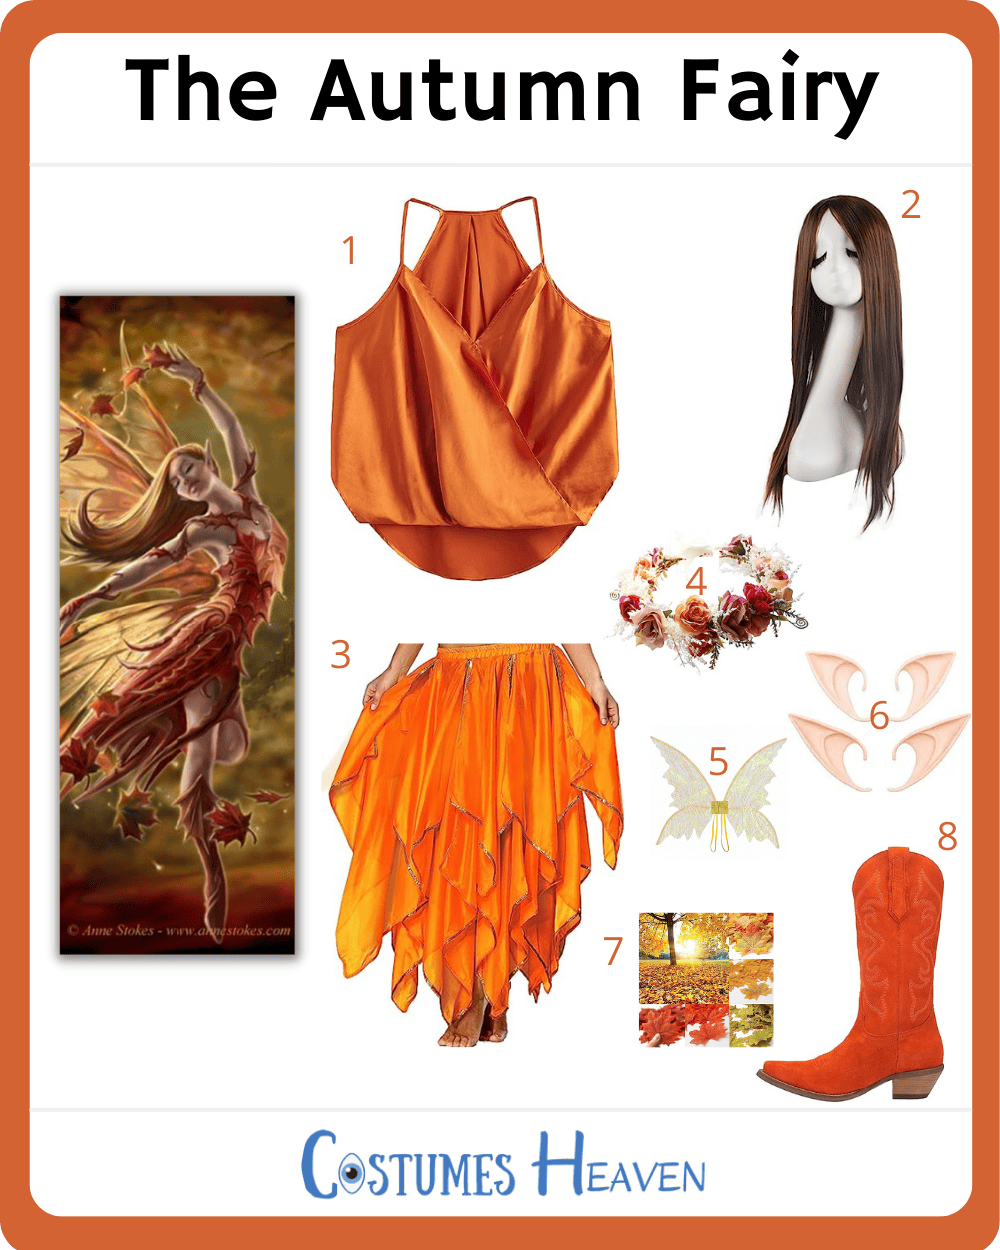 The Autumn Fairy Costume